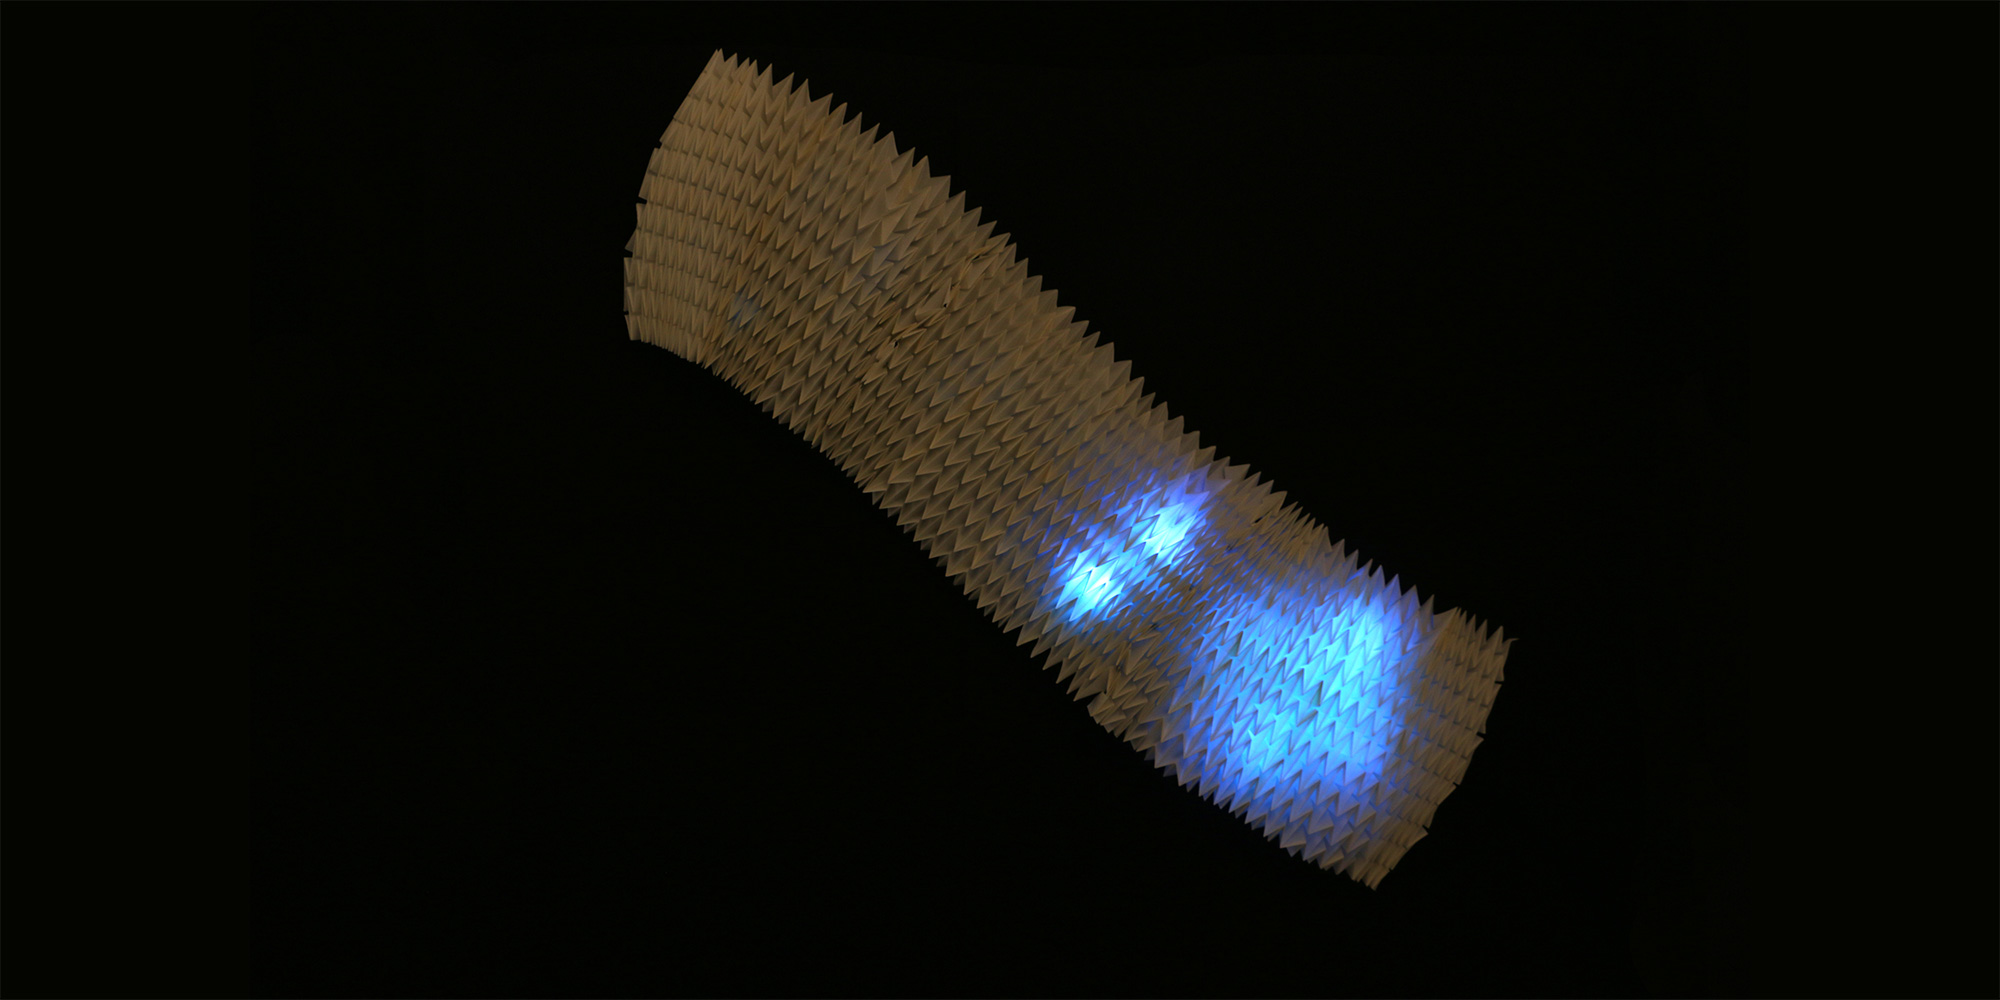 Illuminated Paper Wave, Lisa Hametner (AT)